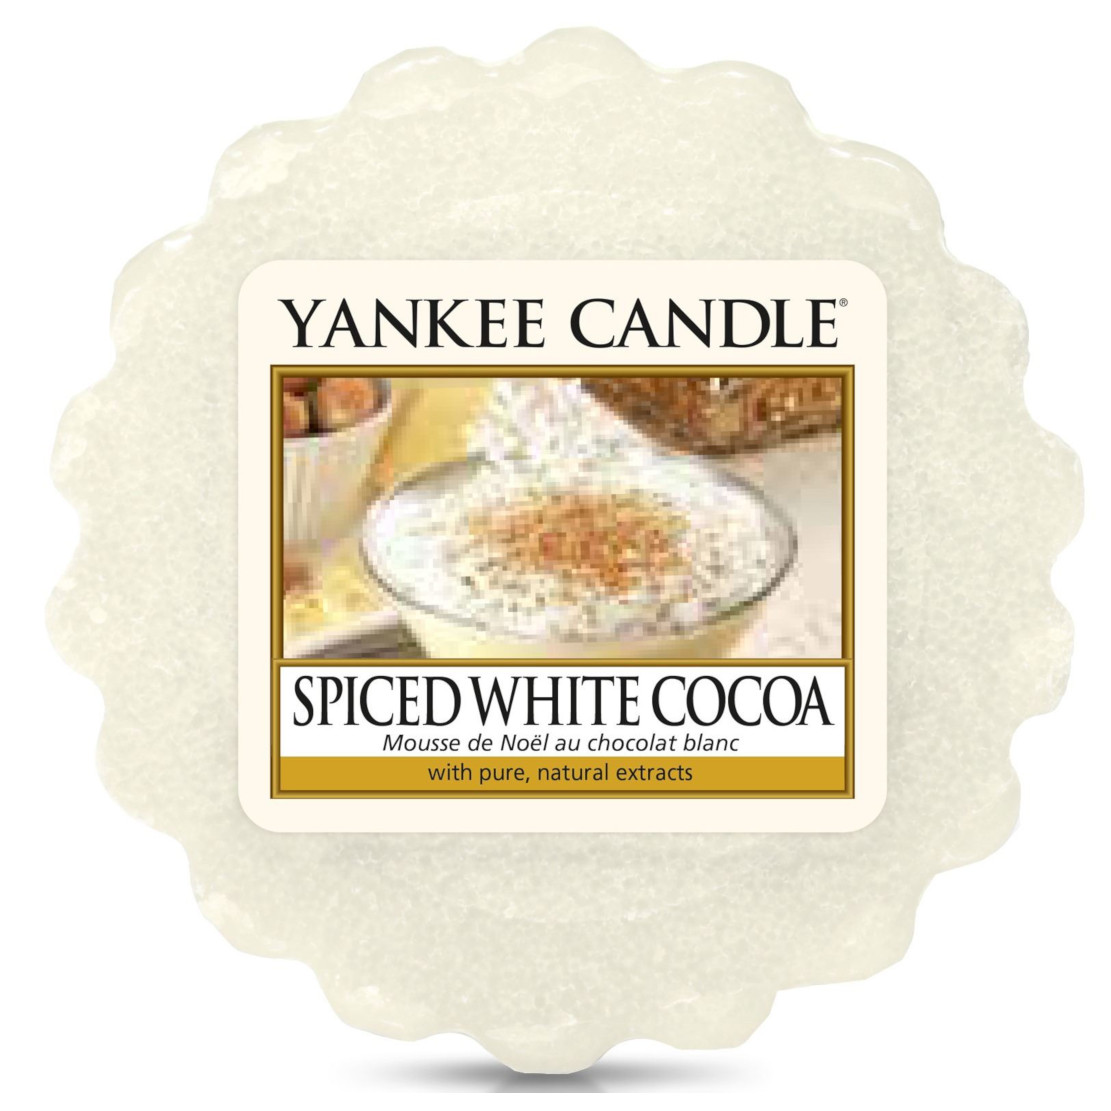 Yankee Candle Spiced White Cocoa Wax Melt Tart